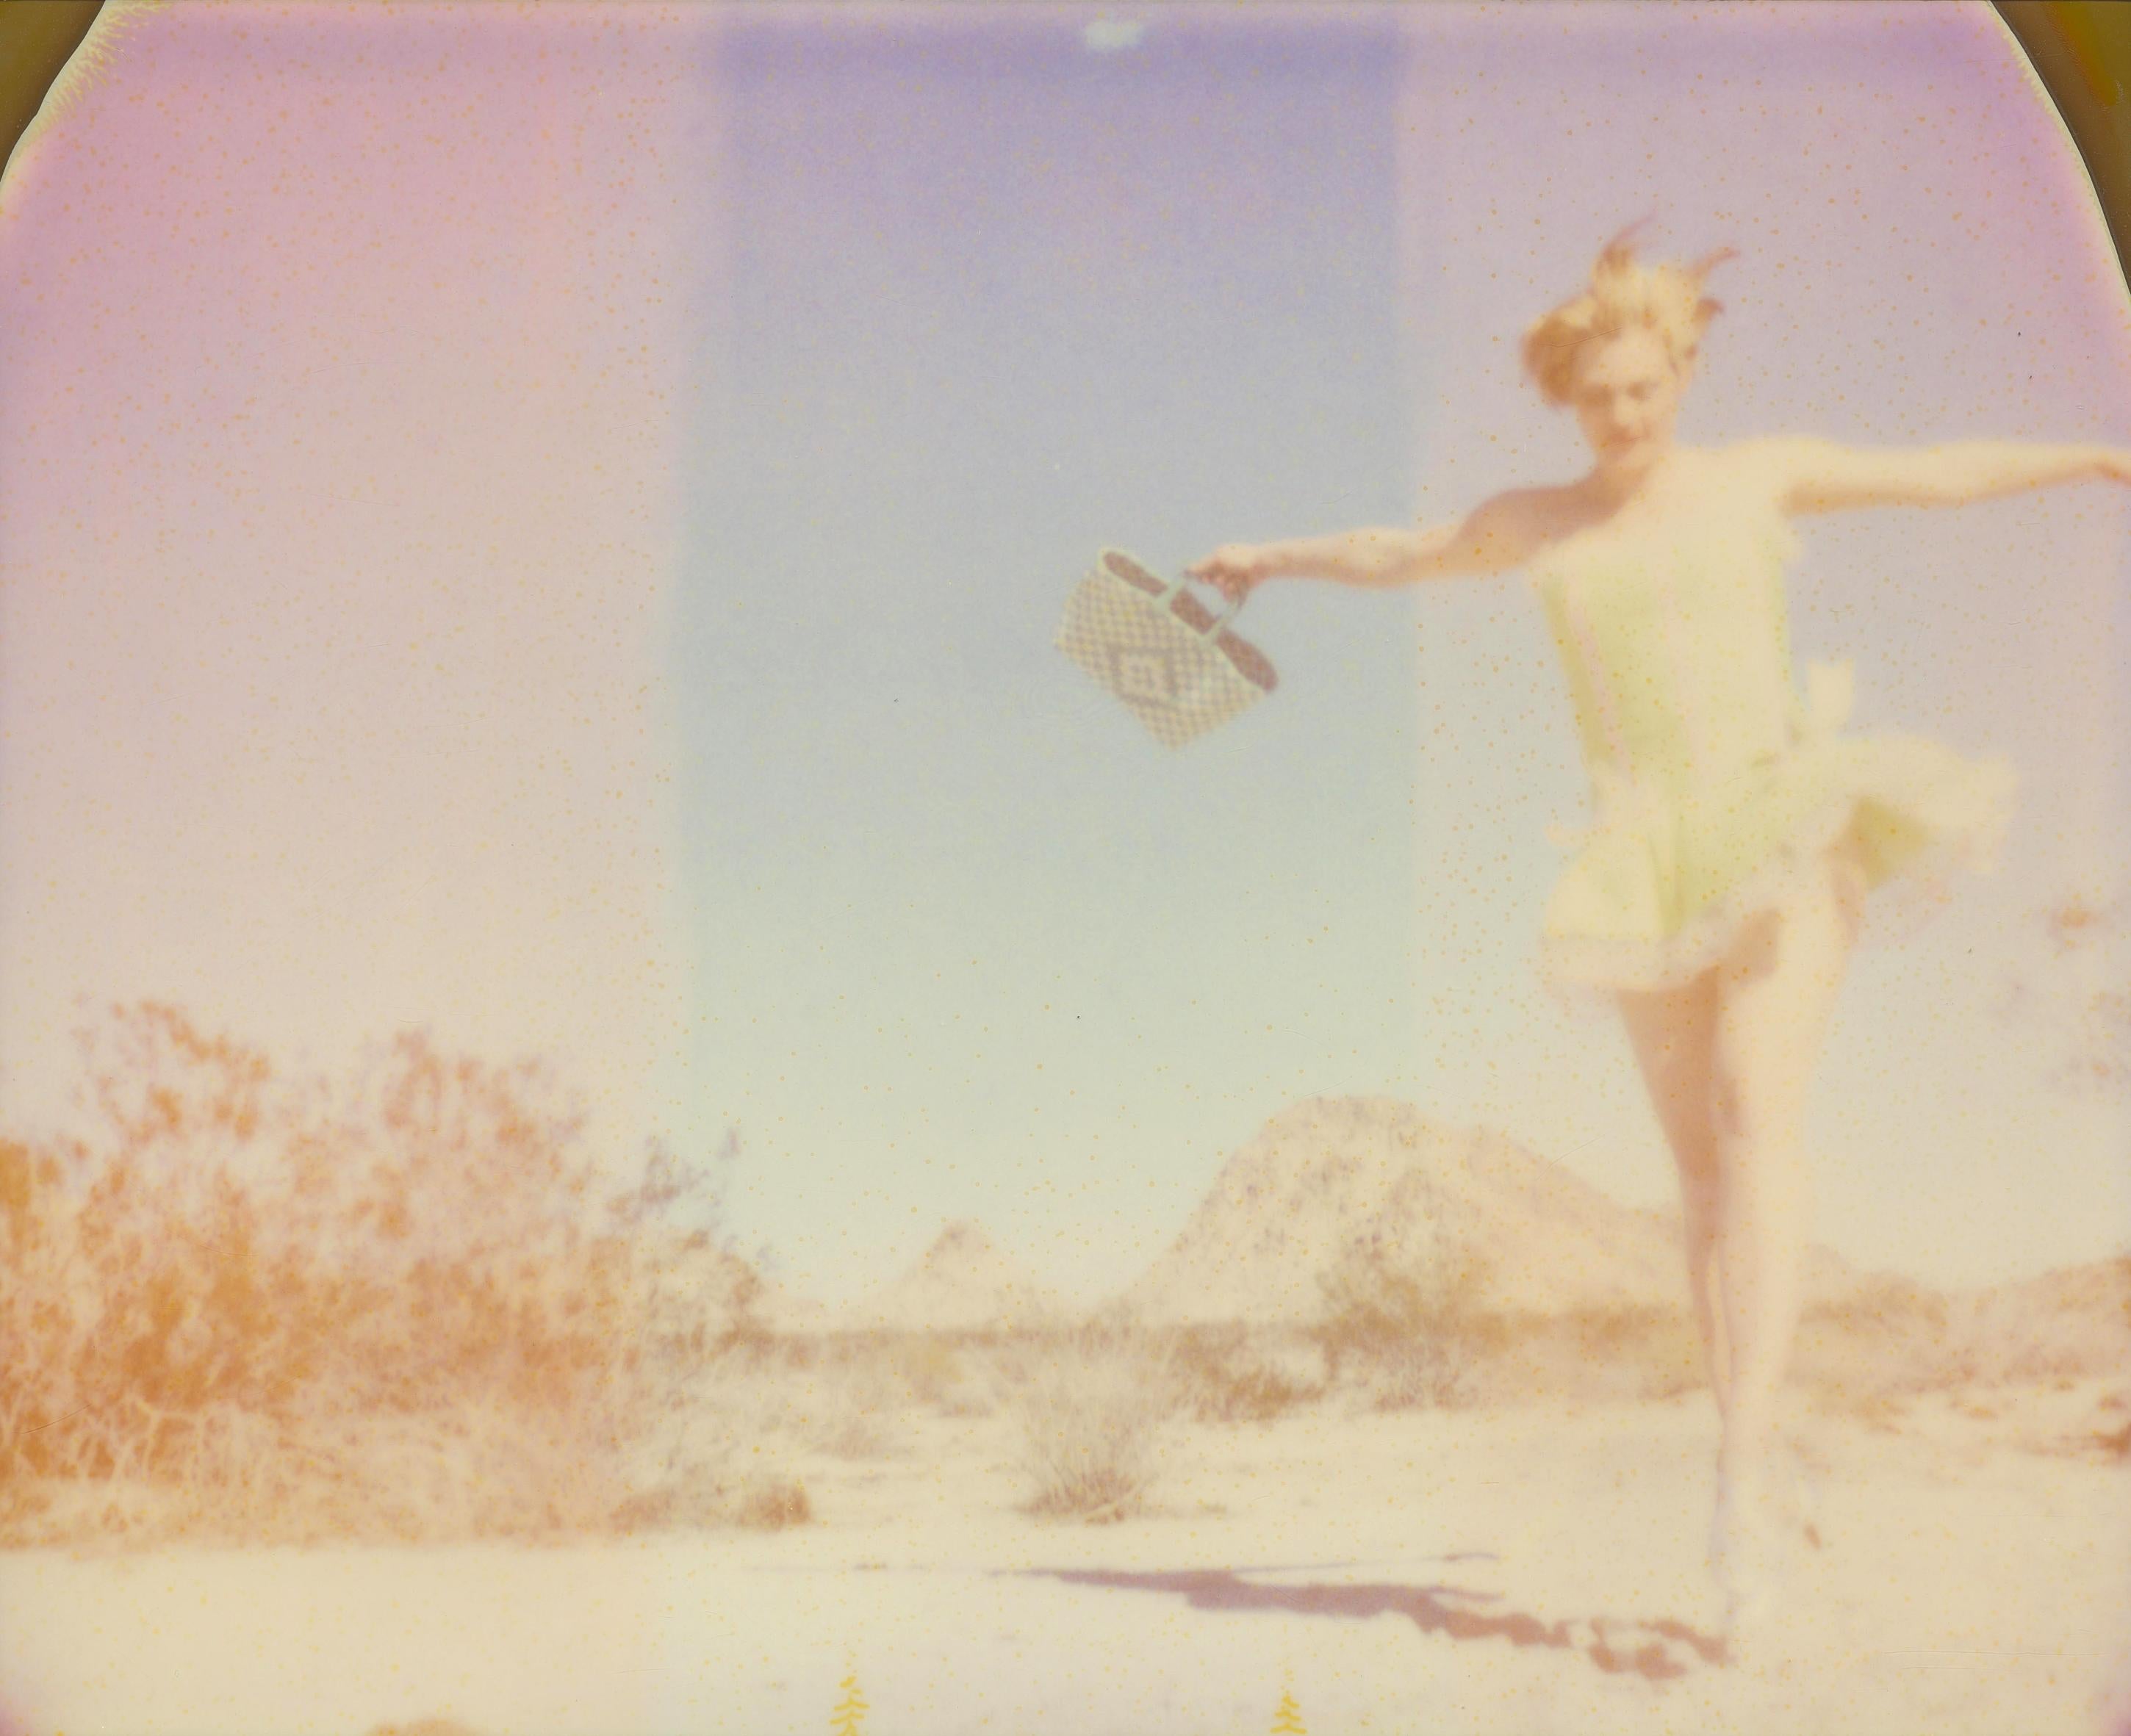 Stefanie Schneider Color Photograph - The Sound of Music (29 Palms, CA) - analog